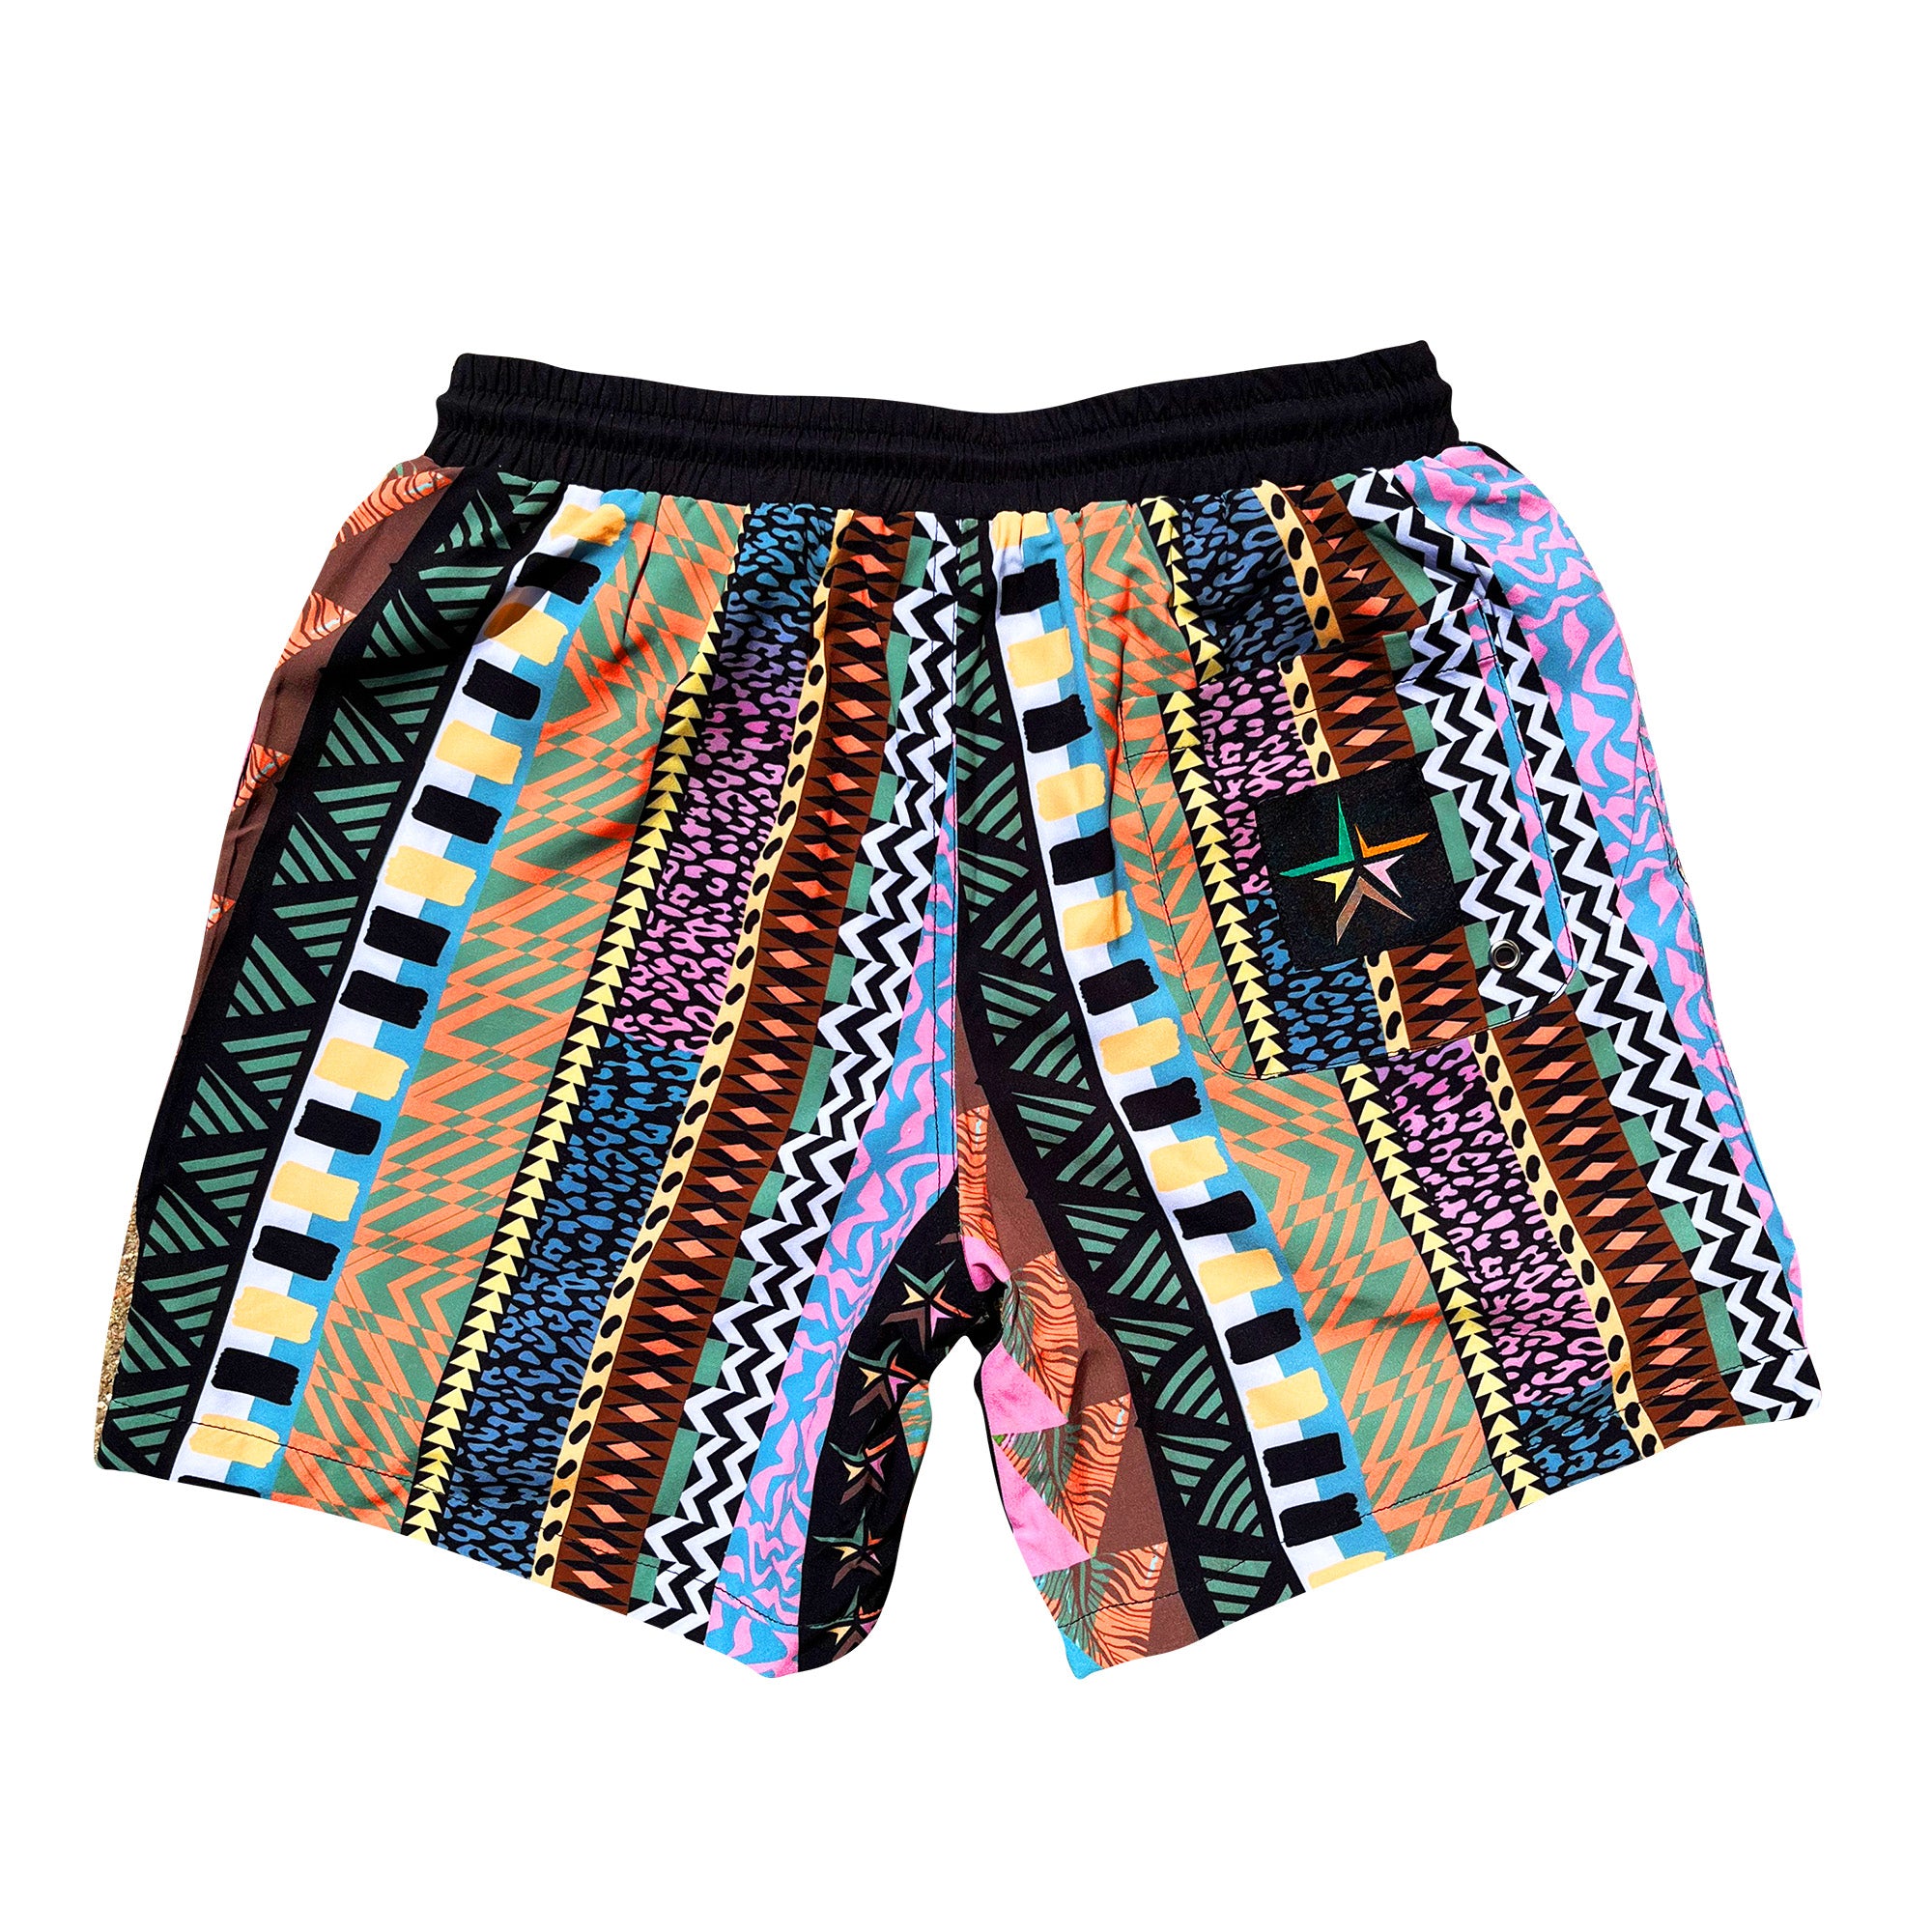 The Nickle Retro Throwback Coogi Tribal pink blue yellow orange green vintage style design swim shorts swim trunks.